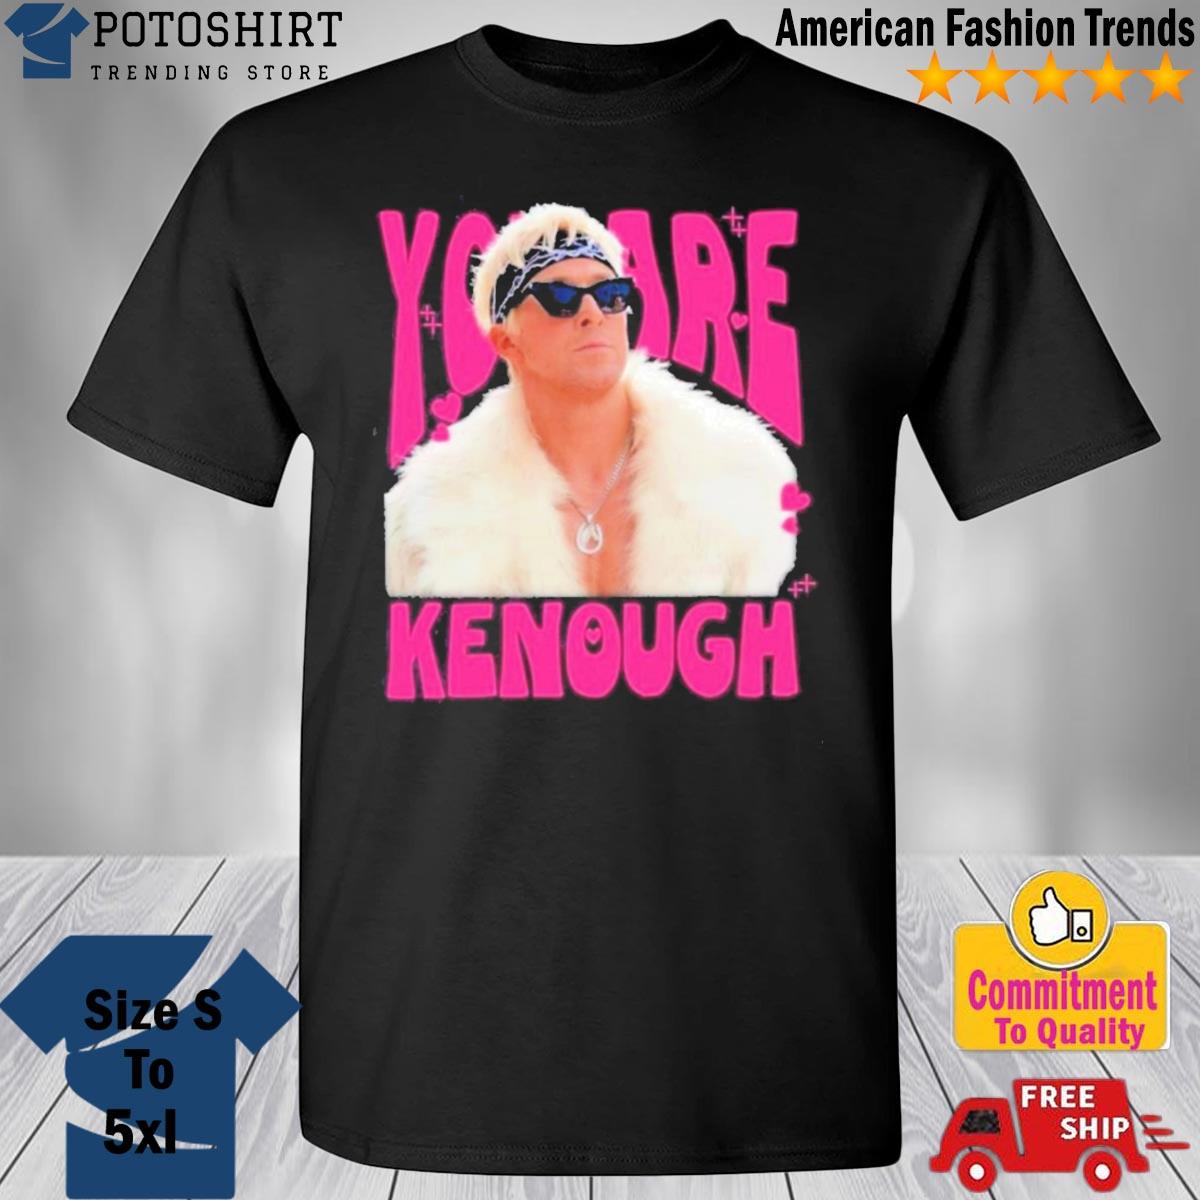 https://images.potoshirt.com/2023/07/product-you-are-keough-ryan-gosling-shirt-Tshirt.jpg